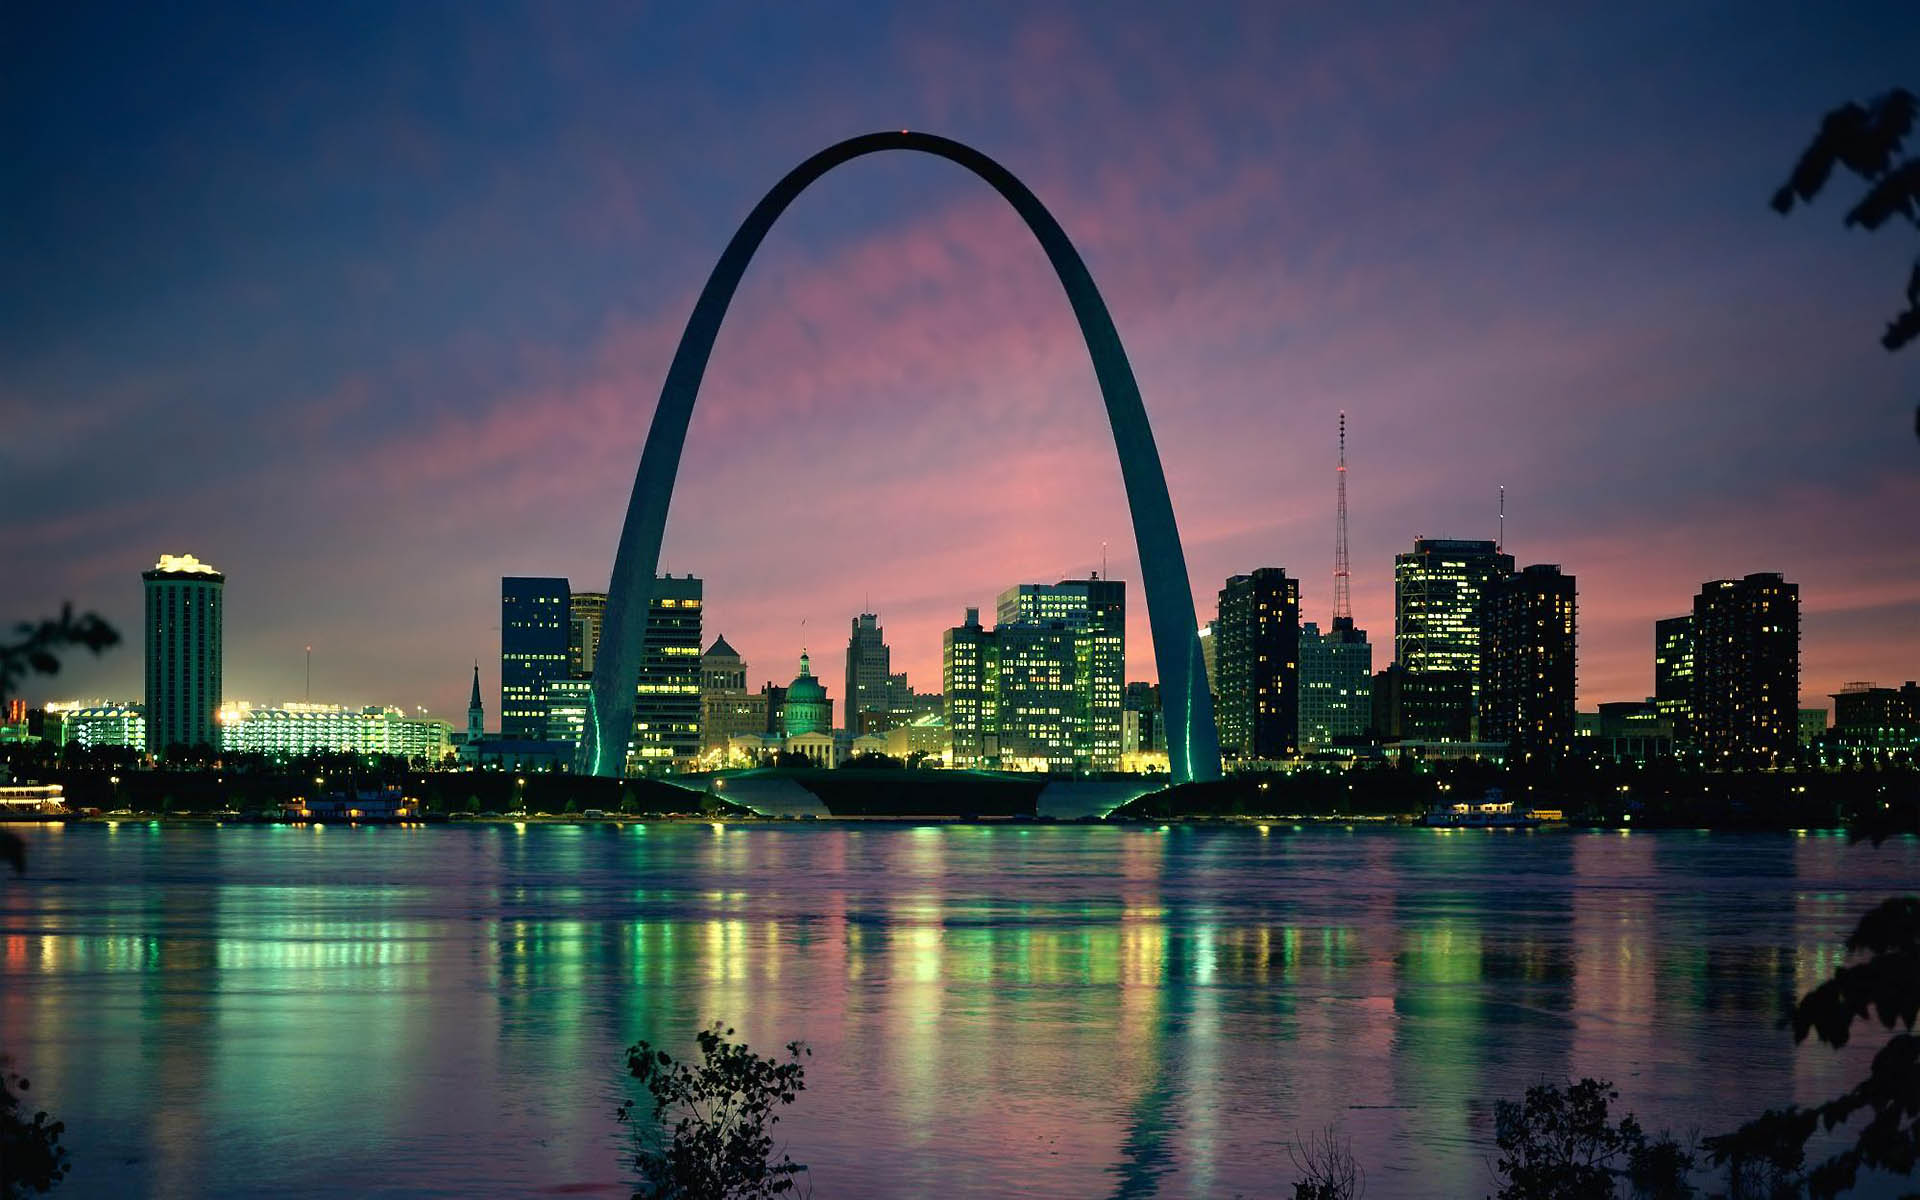 St. Louis Arch - desktop wallpaper